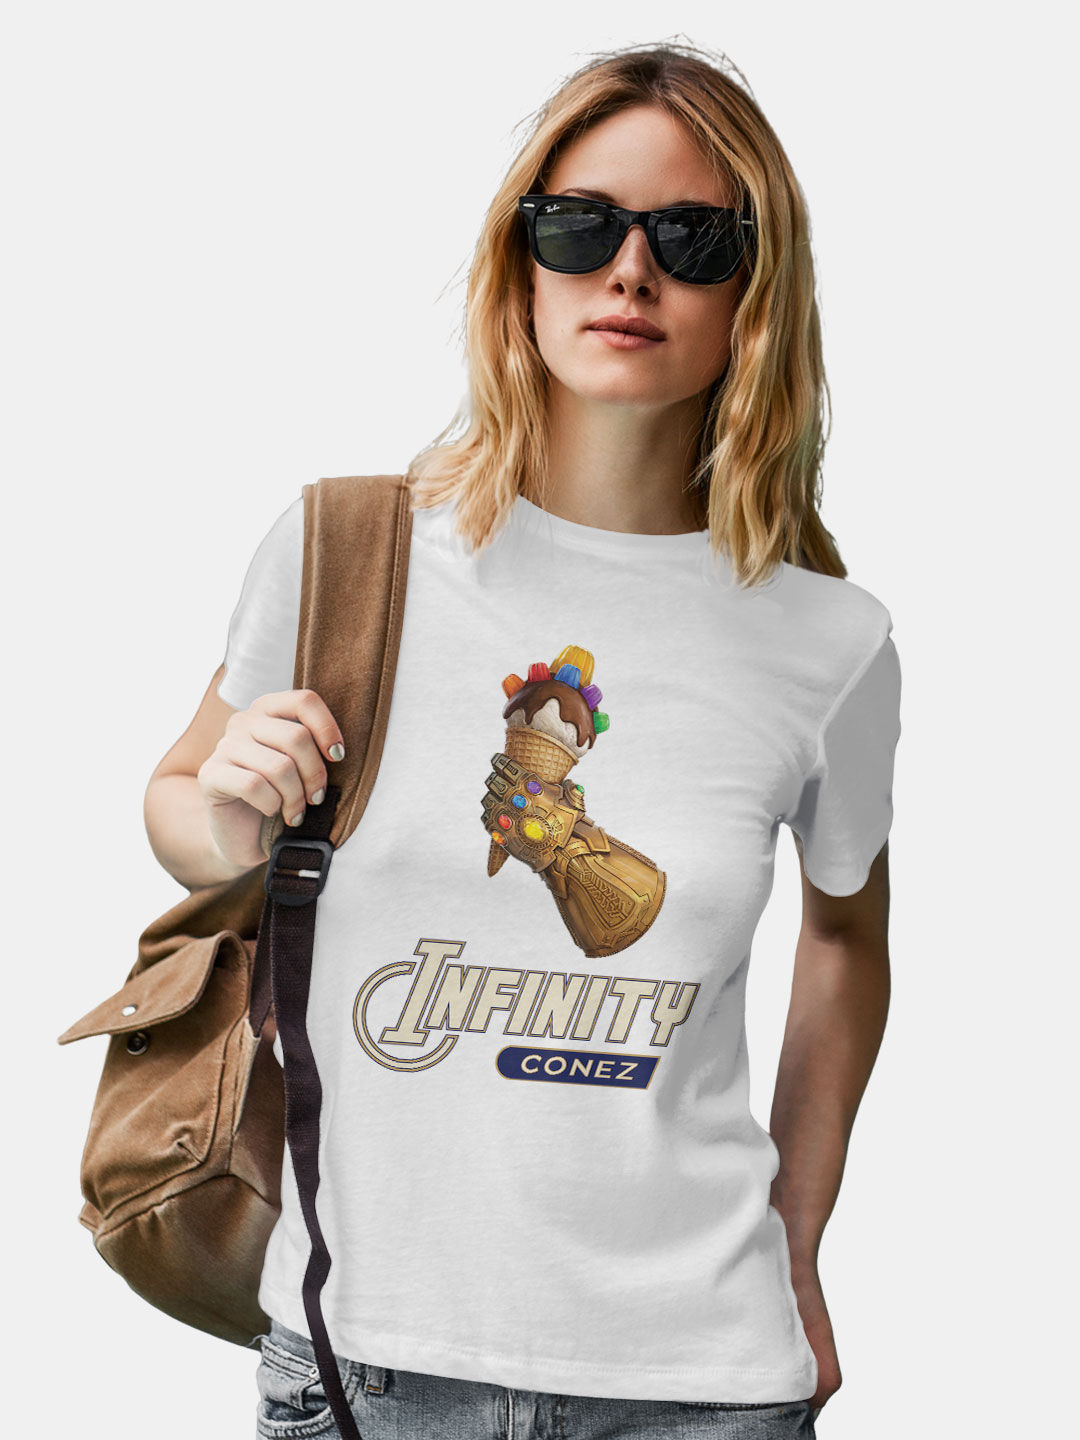 Buy Infinity Conez - Female Designer T-Shirts T-Shirts Online